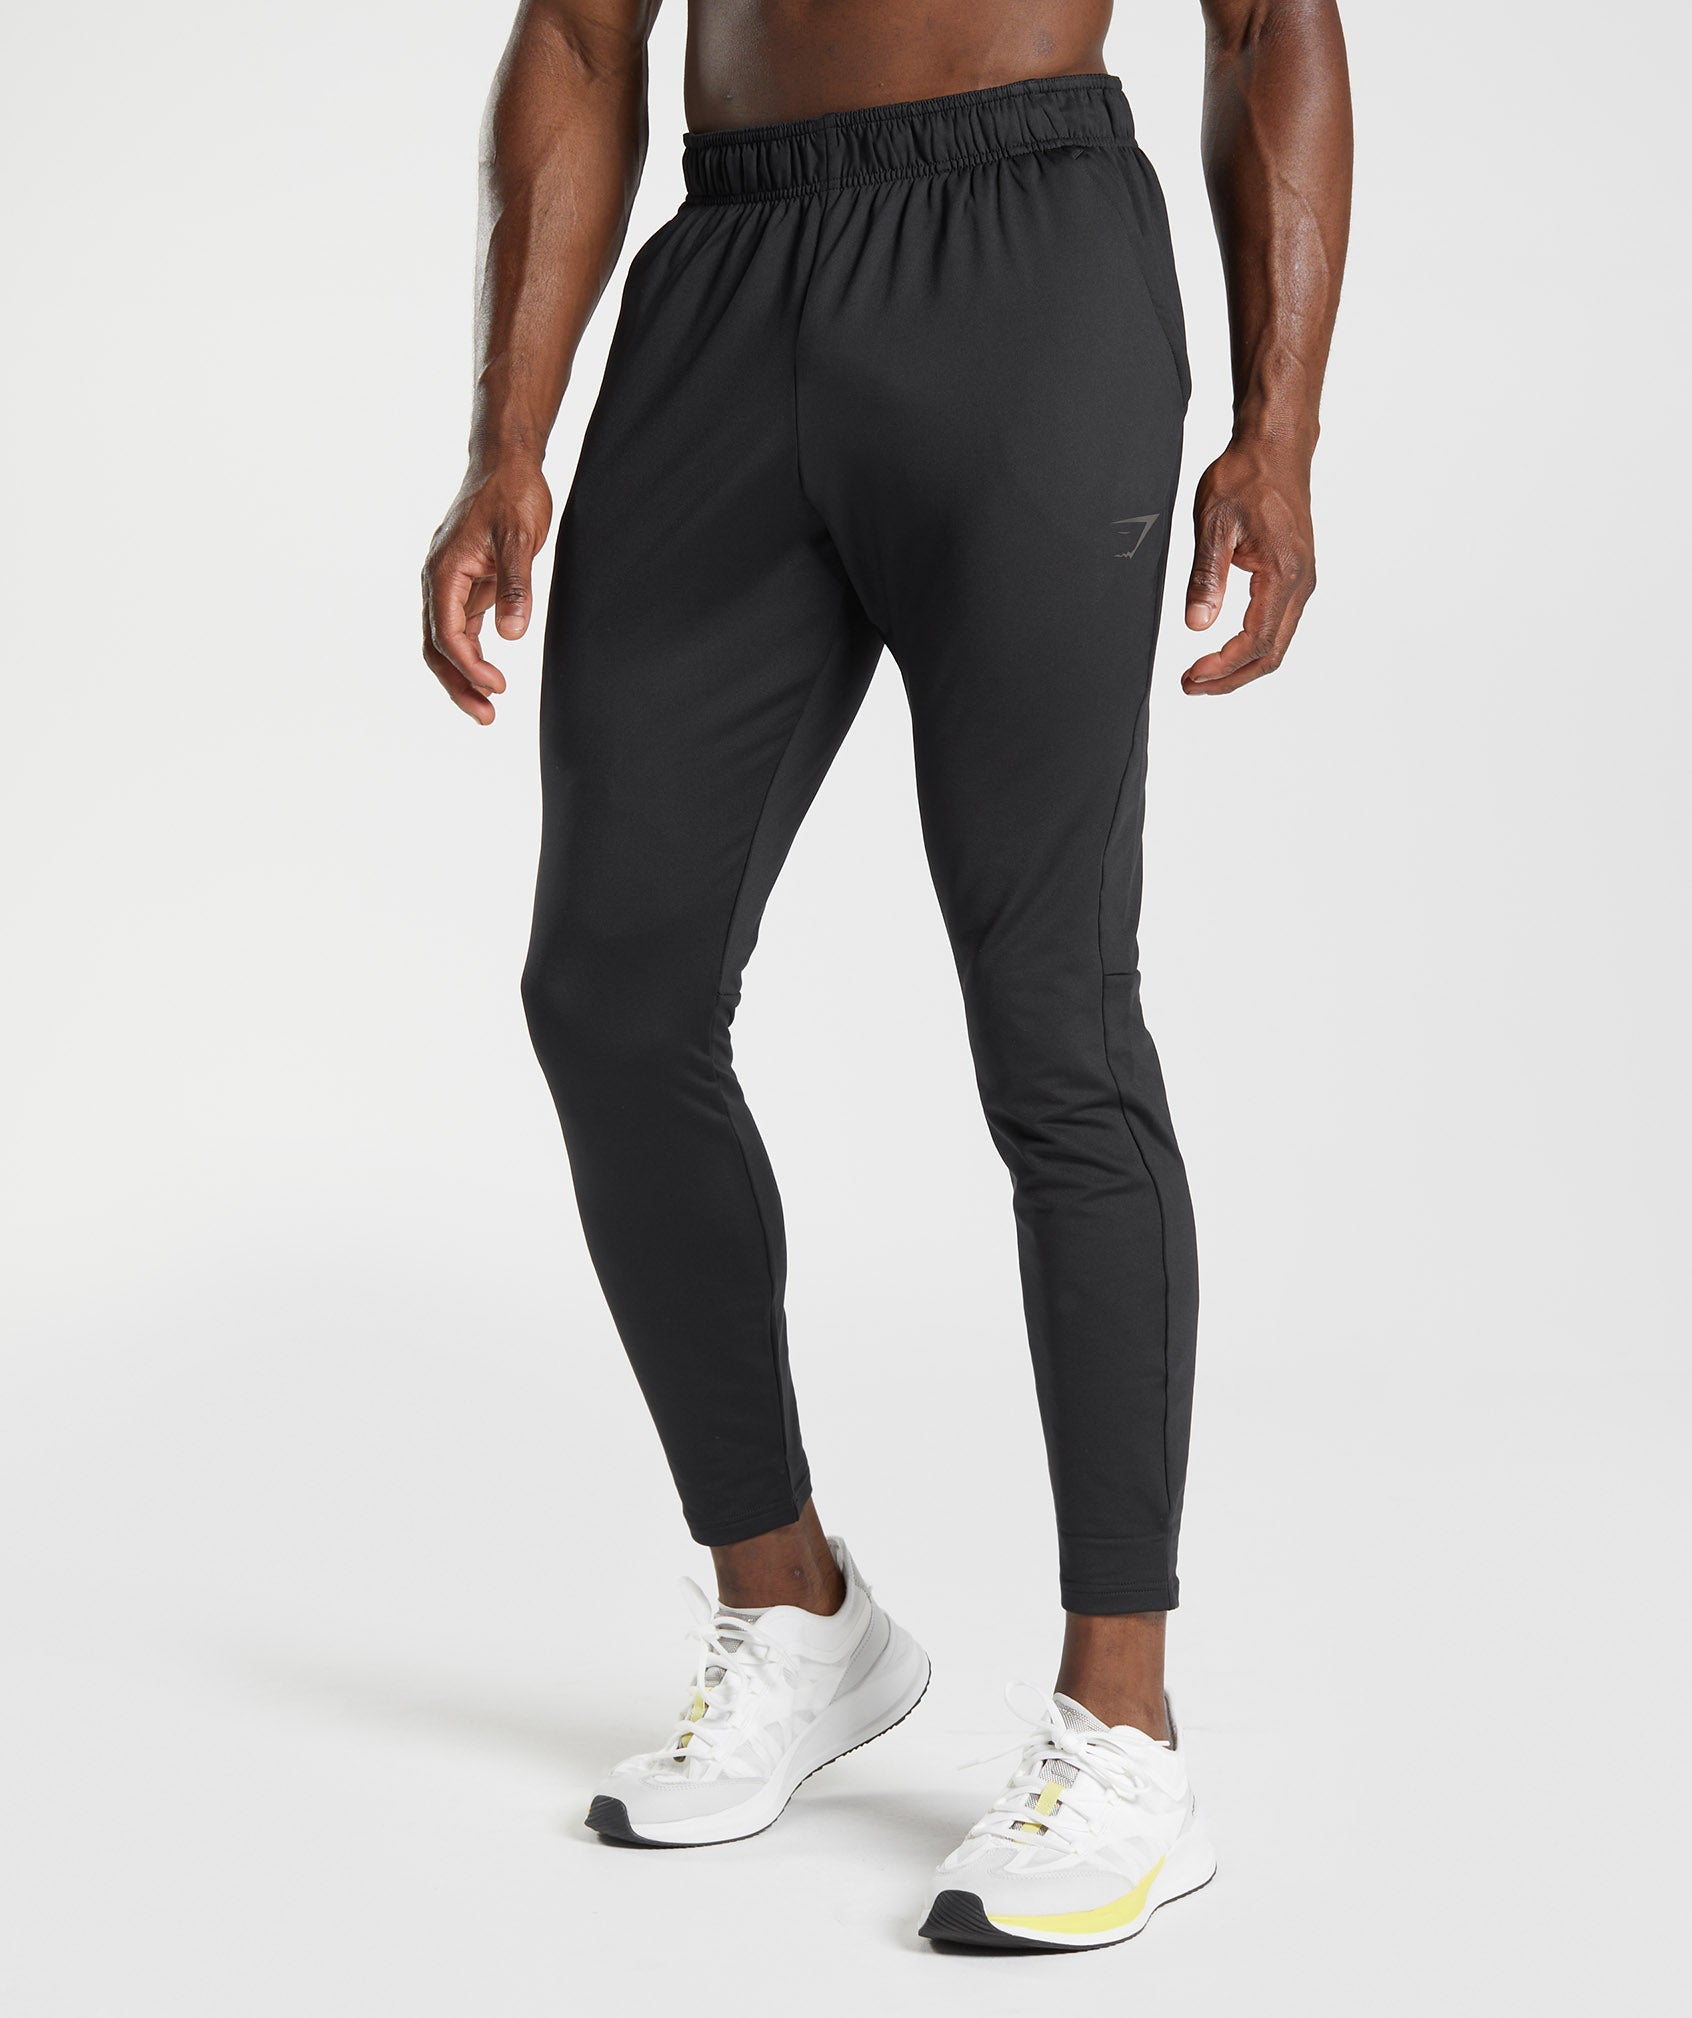 Hfyihgf Mens Fashion Joggers Sports Pants Casual Cotton Cargo Pants Gym  Sweatpants Trousers Mens Long Pant(Black,XL)